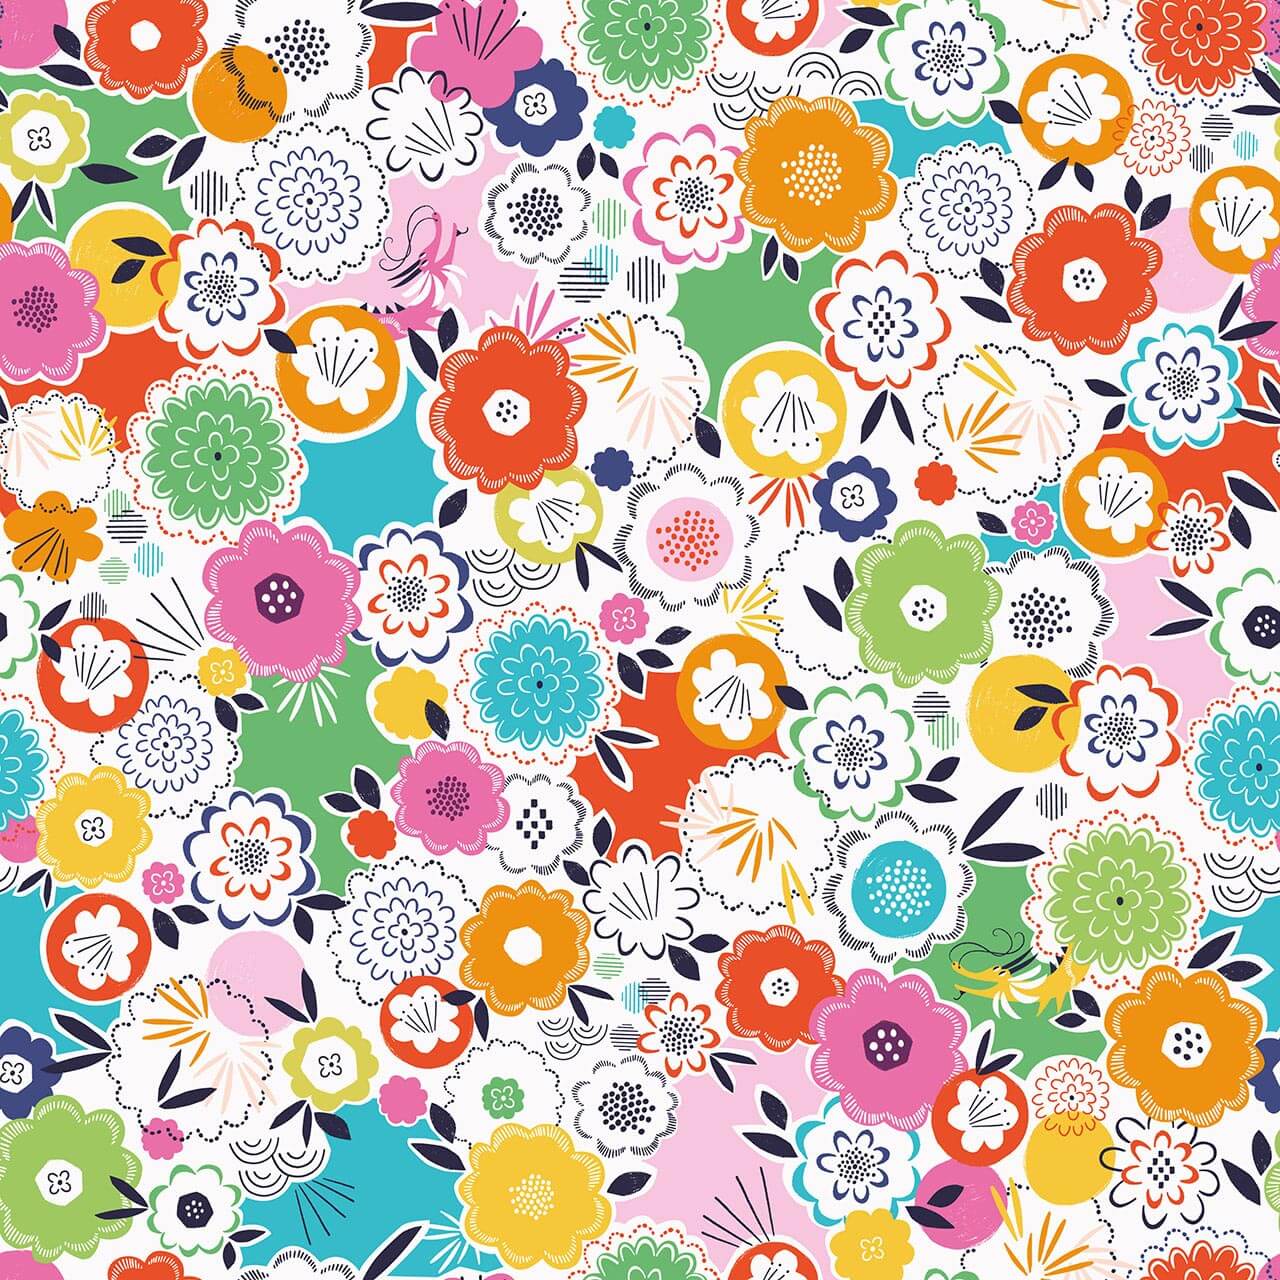 Flowers - Silk Roads Fabric Range - Dashwood Studios - Multi Colour